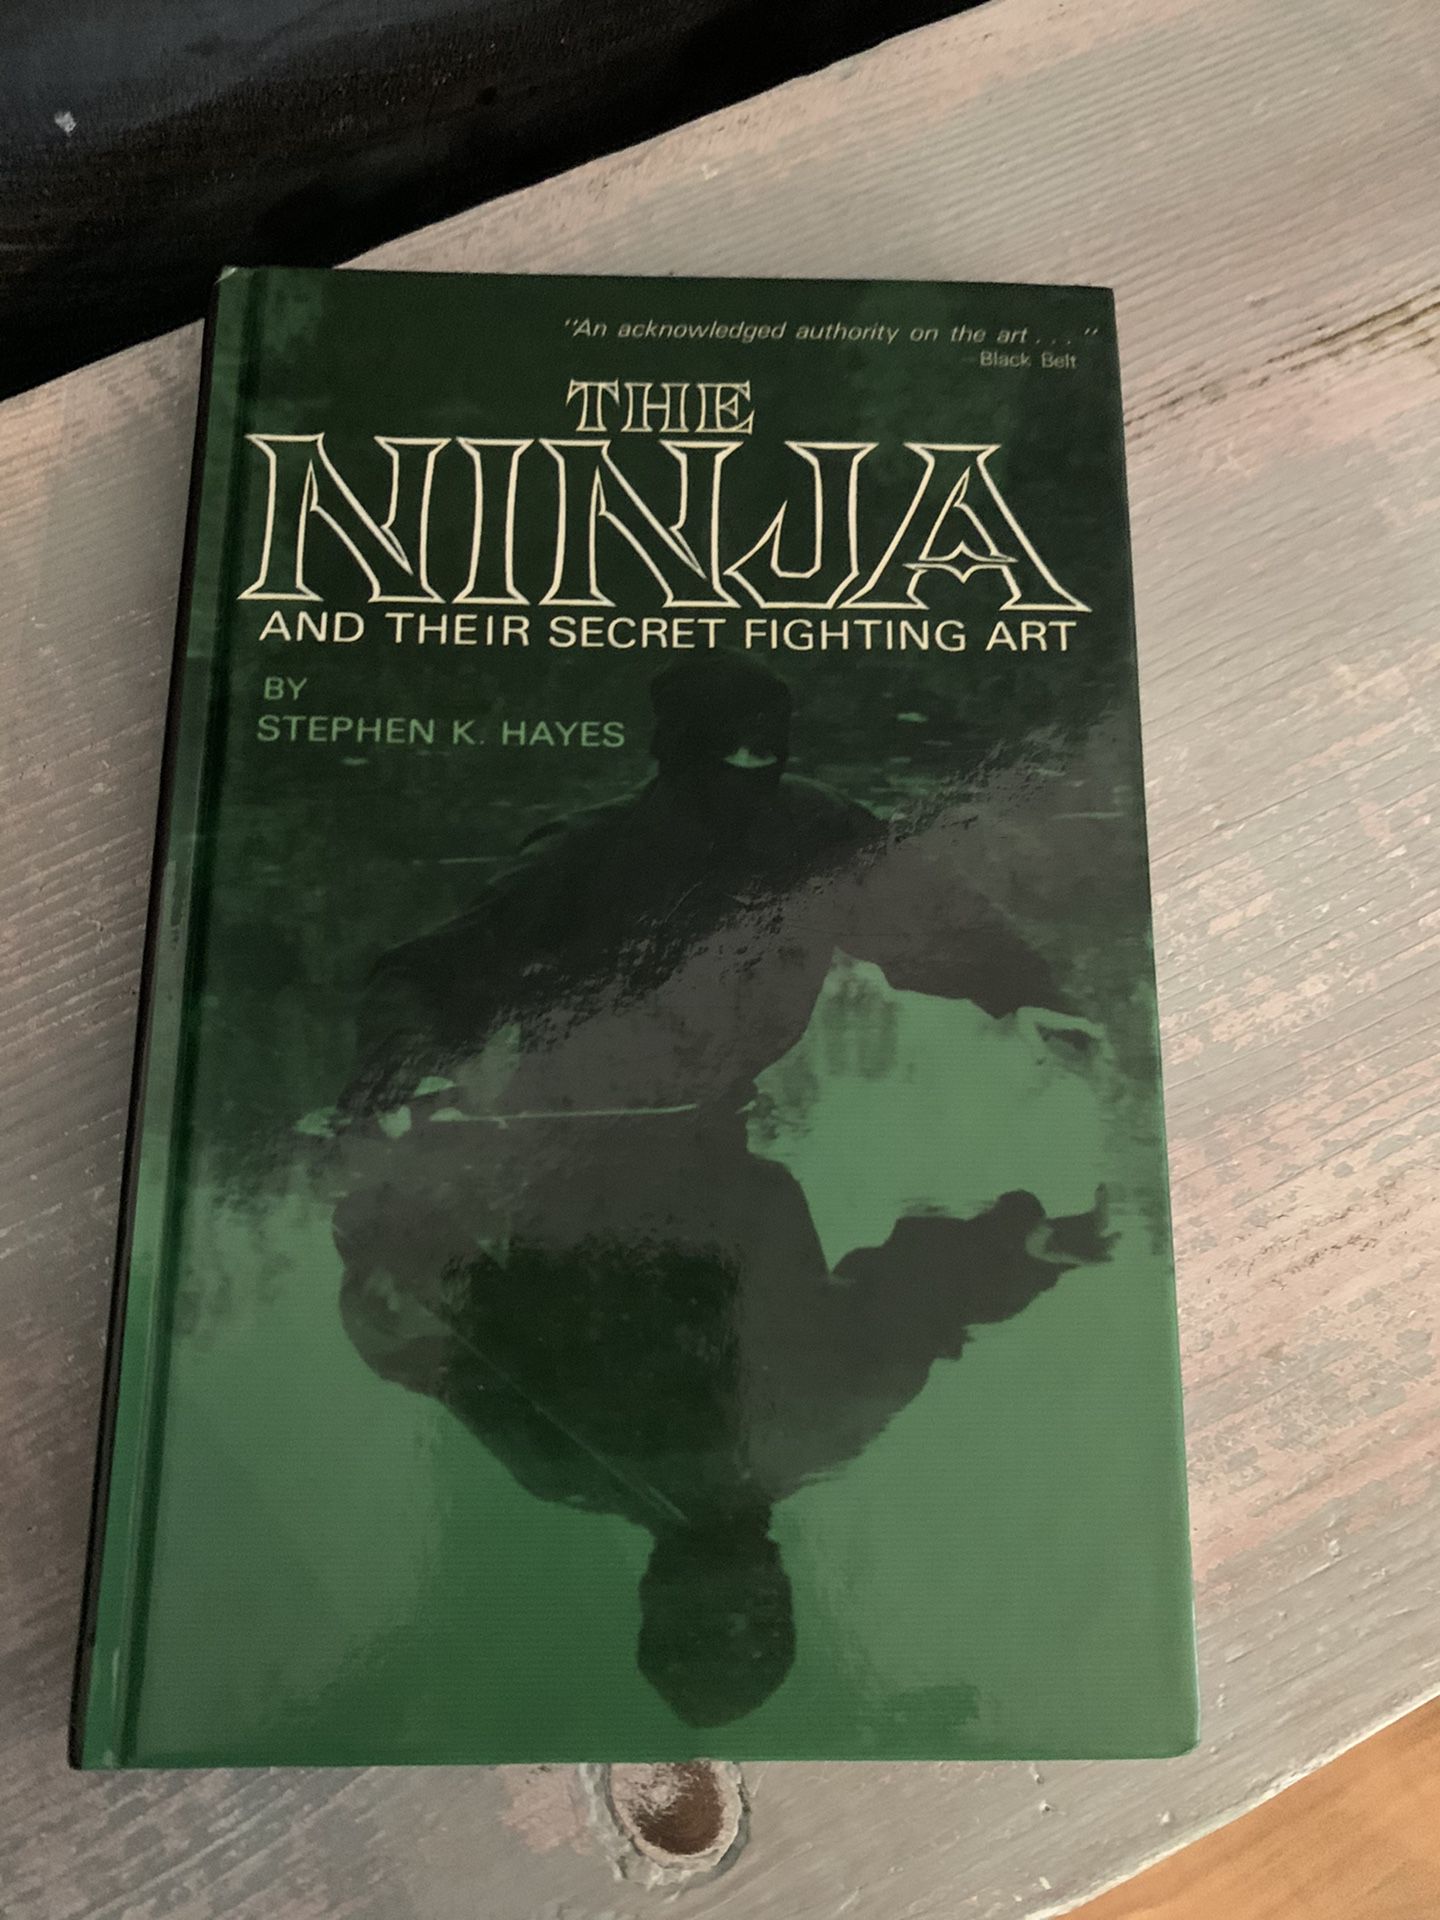 The Ninja Fighting Art Book